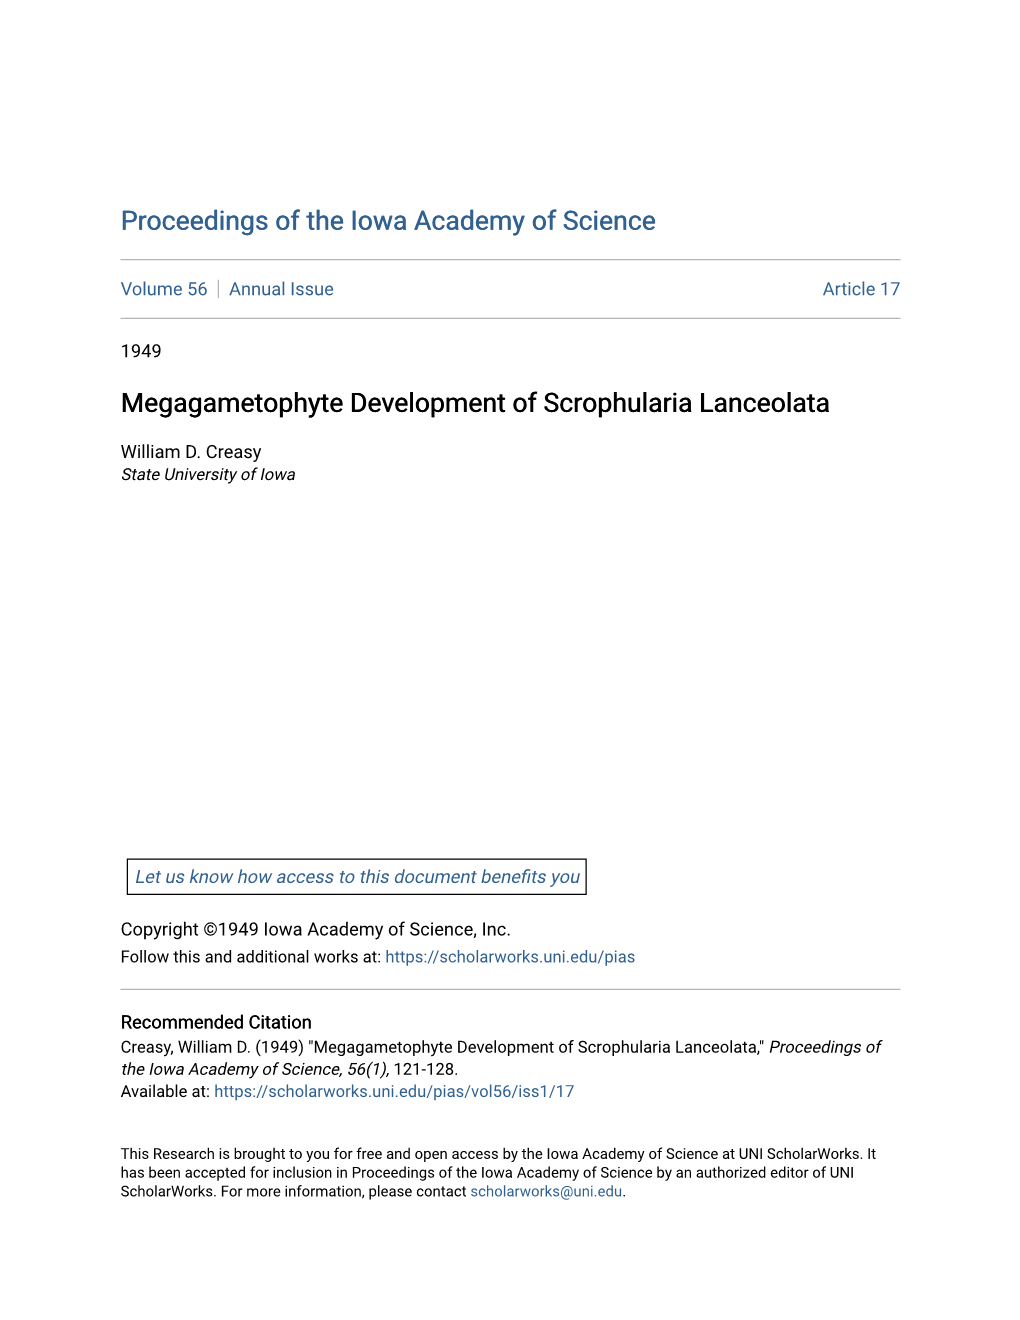 Megagametophyte Development of Scrophularia Lanceolata